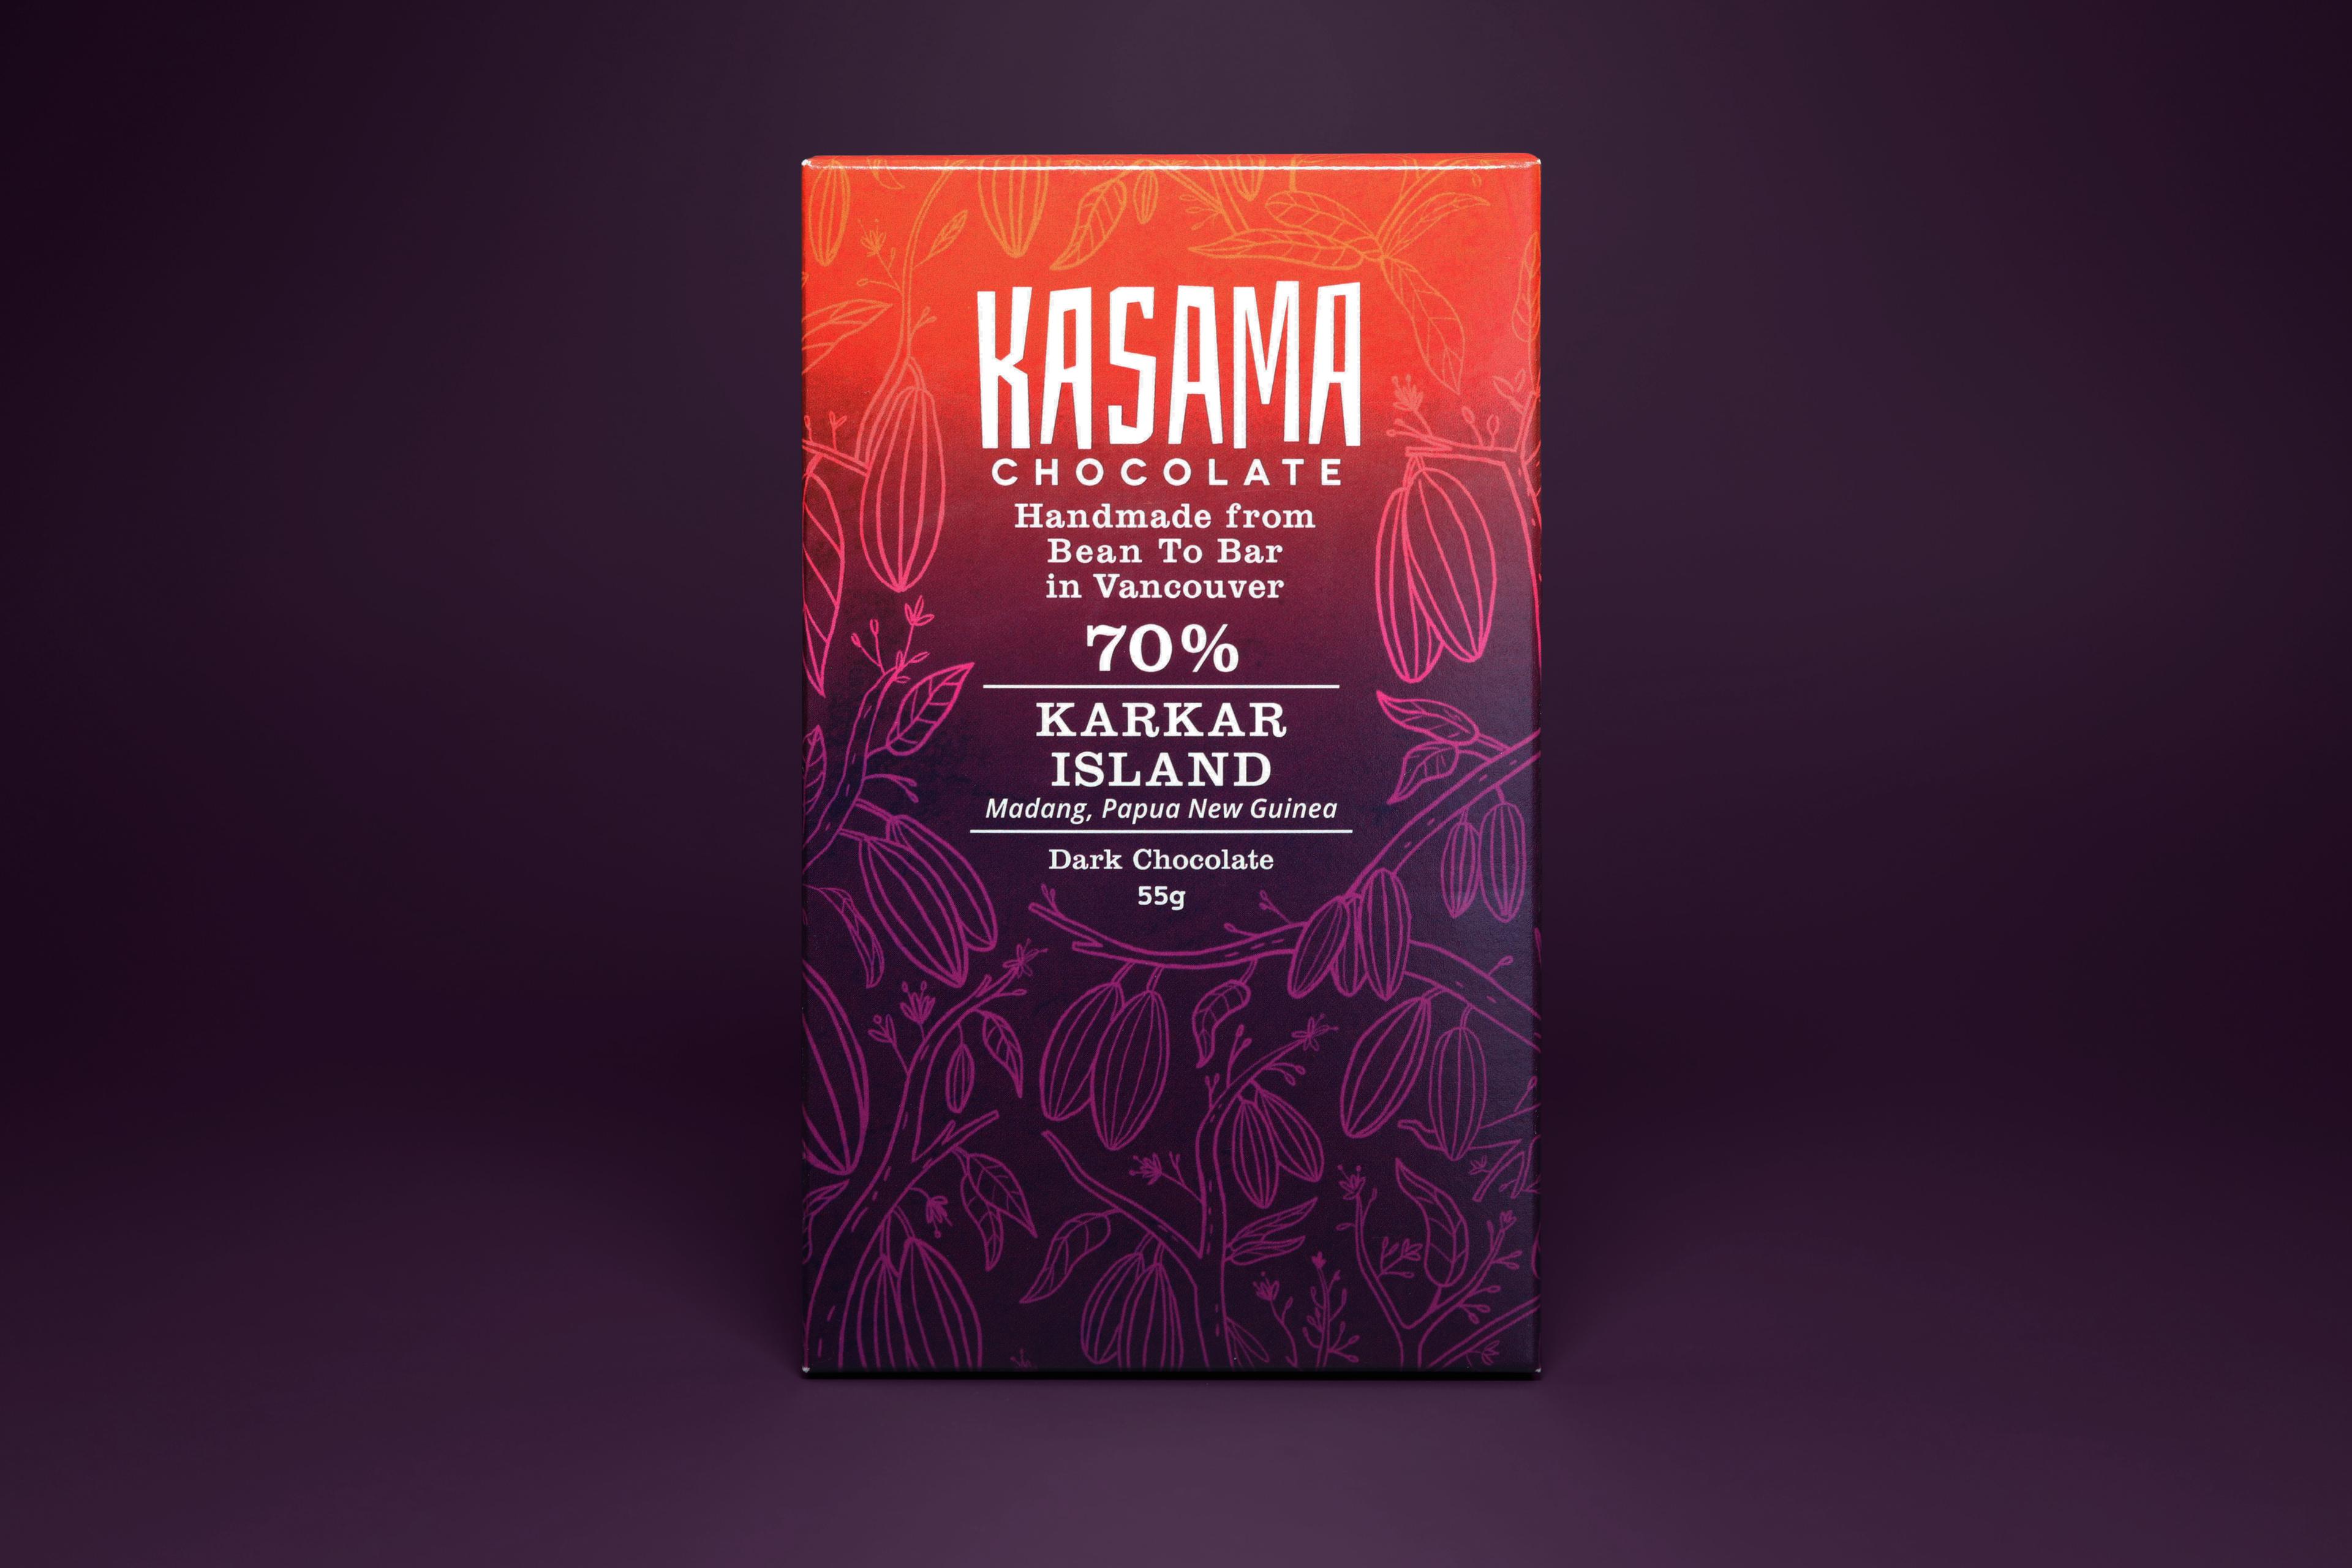 70% Karkar Island bar made by Kasama Chocolate in Canada on a purple gradient background